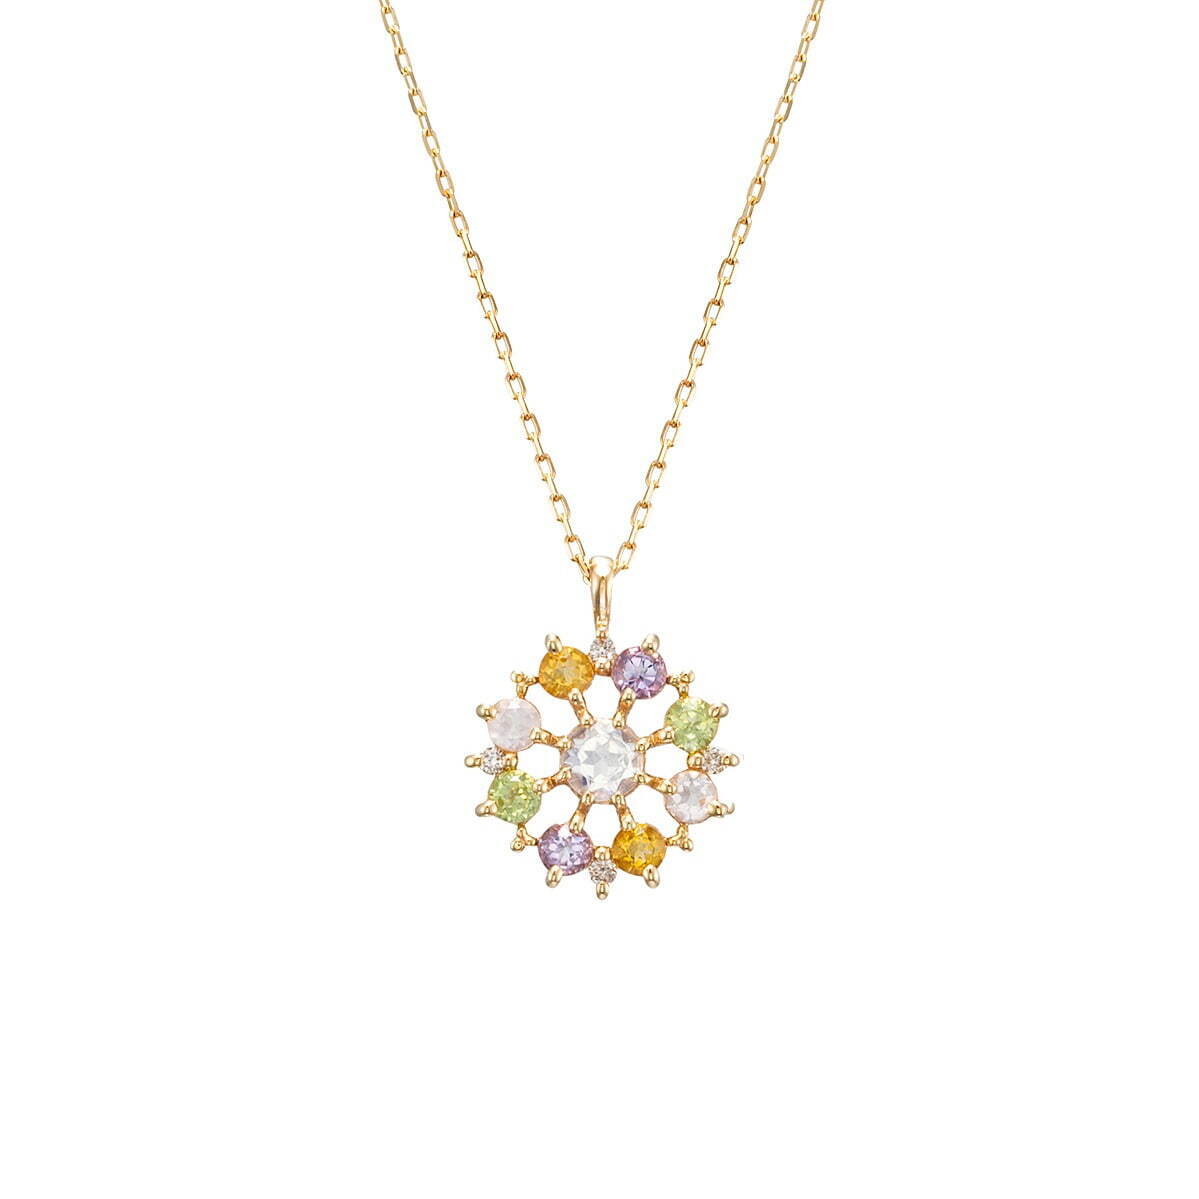 K10YG Necklace / Diamond / Feldspar / Peridot / Rose Quartz / Citrine / Amethyst 37,400円